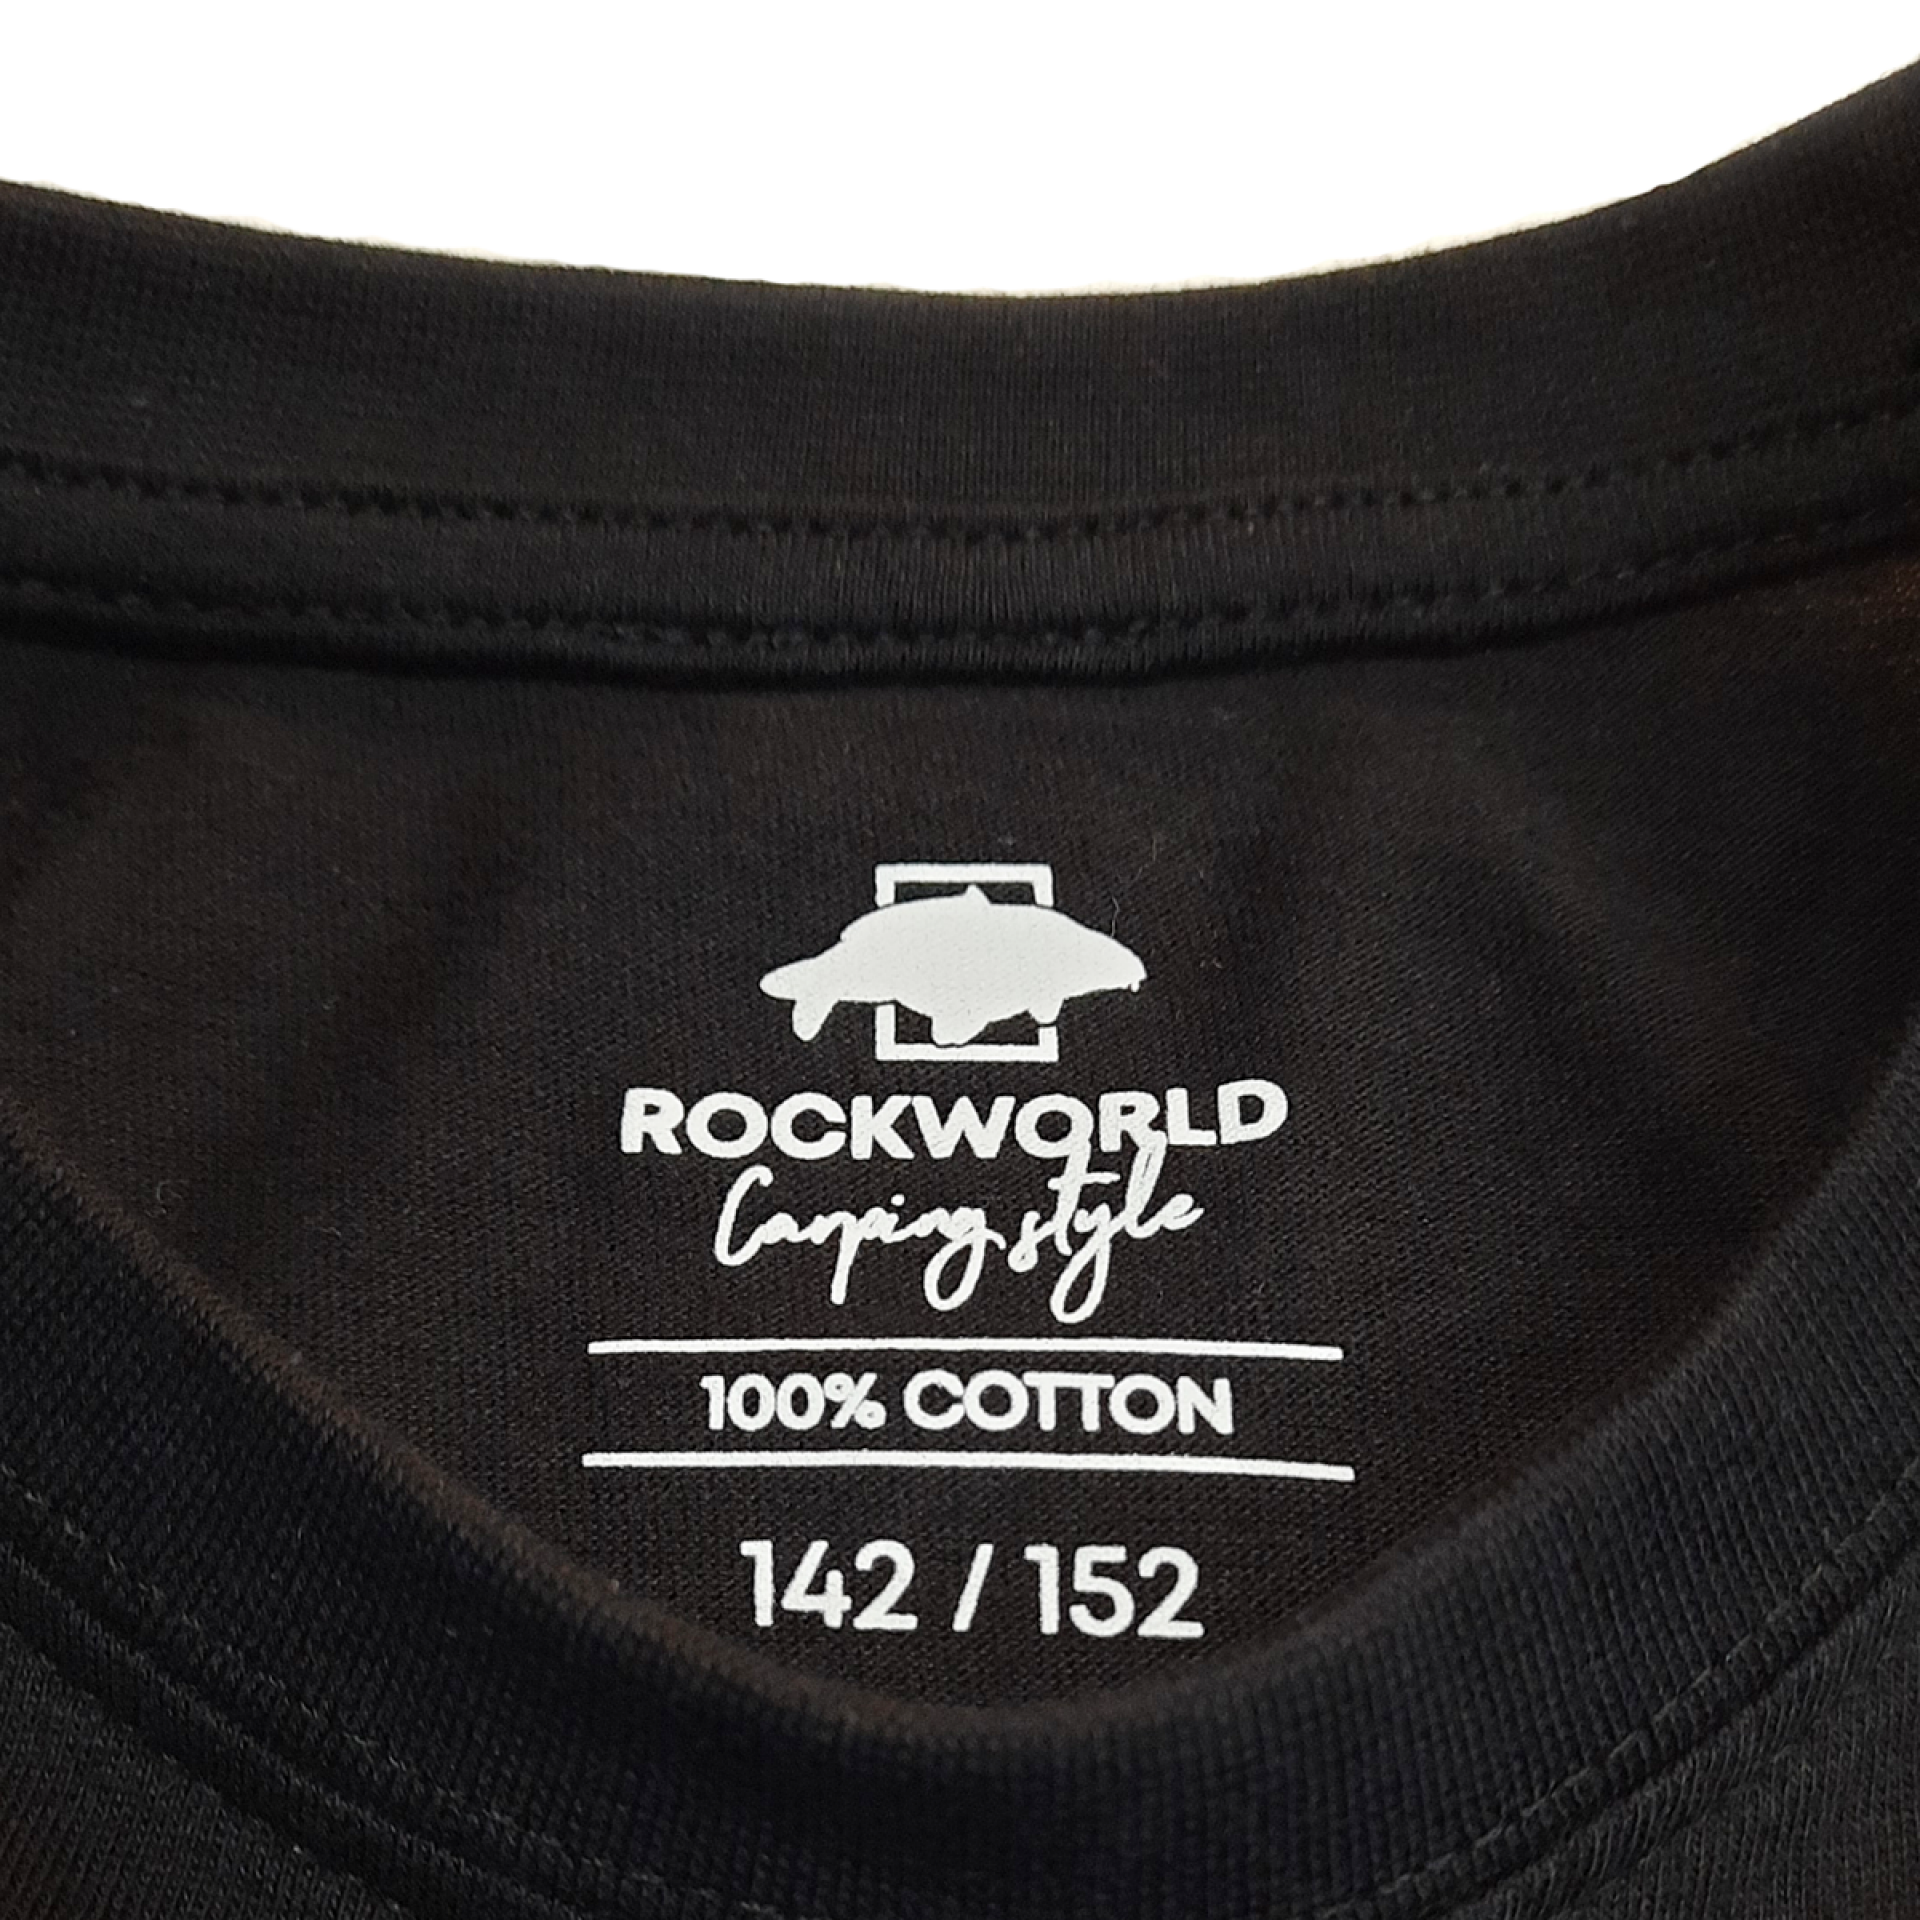 Rockworld Carping Style - Black Kids' T-Shirt